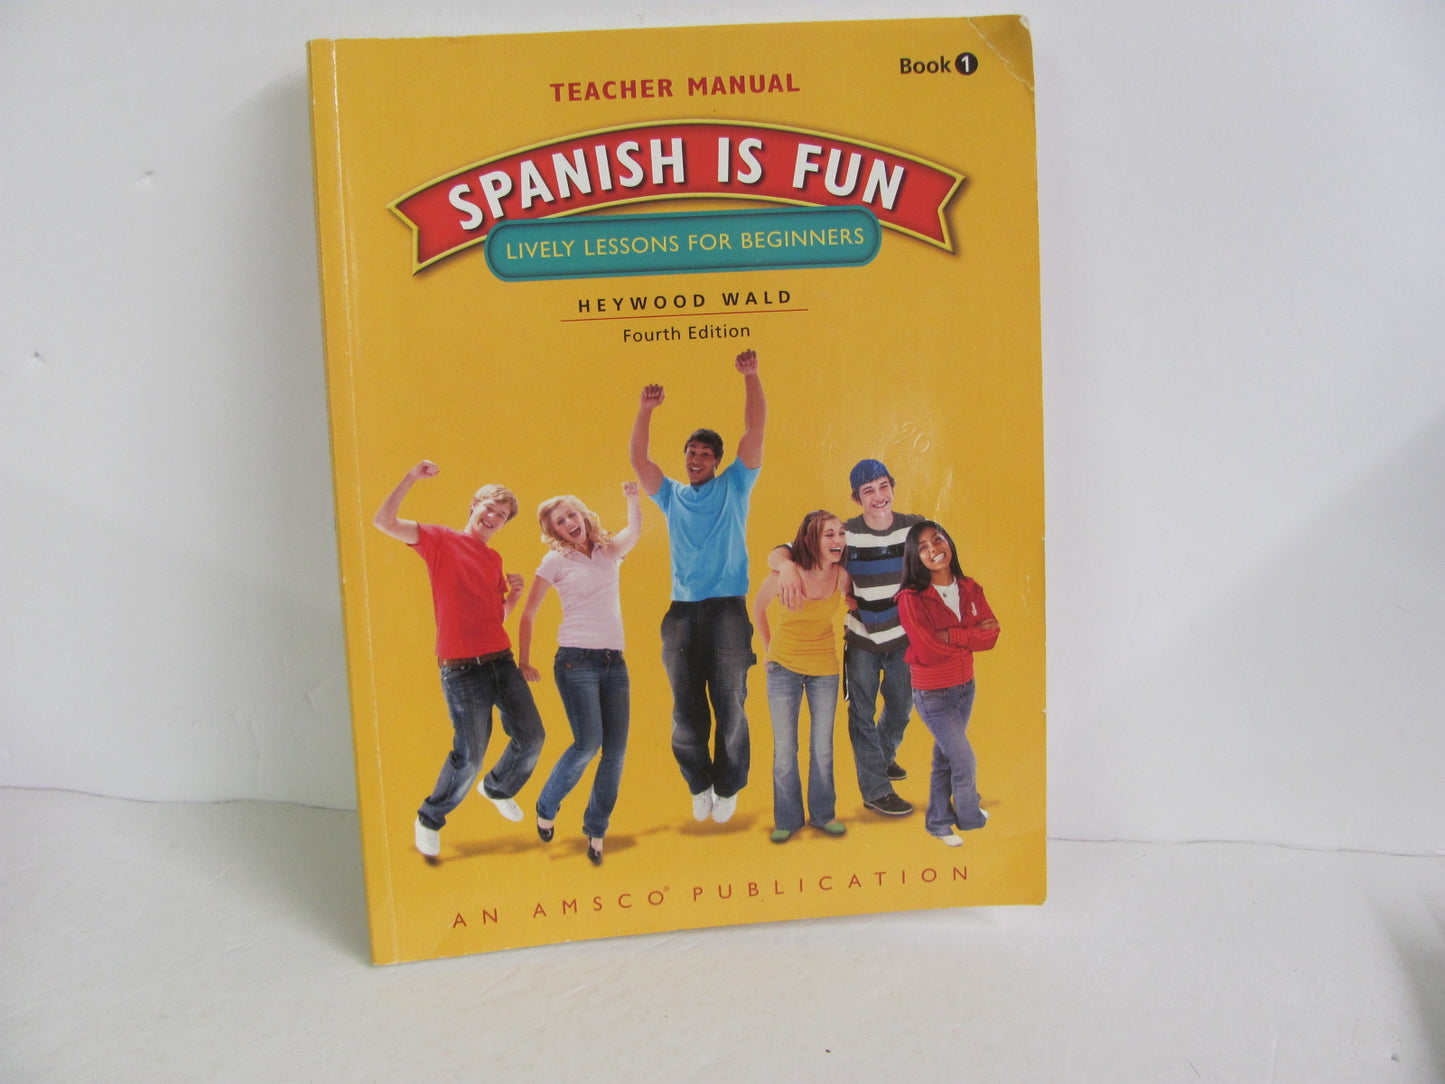 Spanish is Fun Amsco Teacher Manual  Pre-Owned Spanish Books